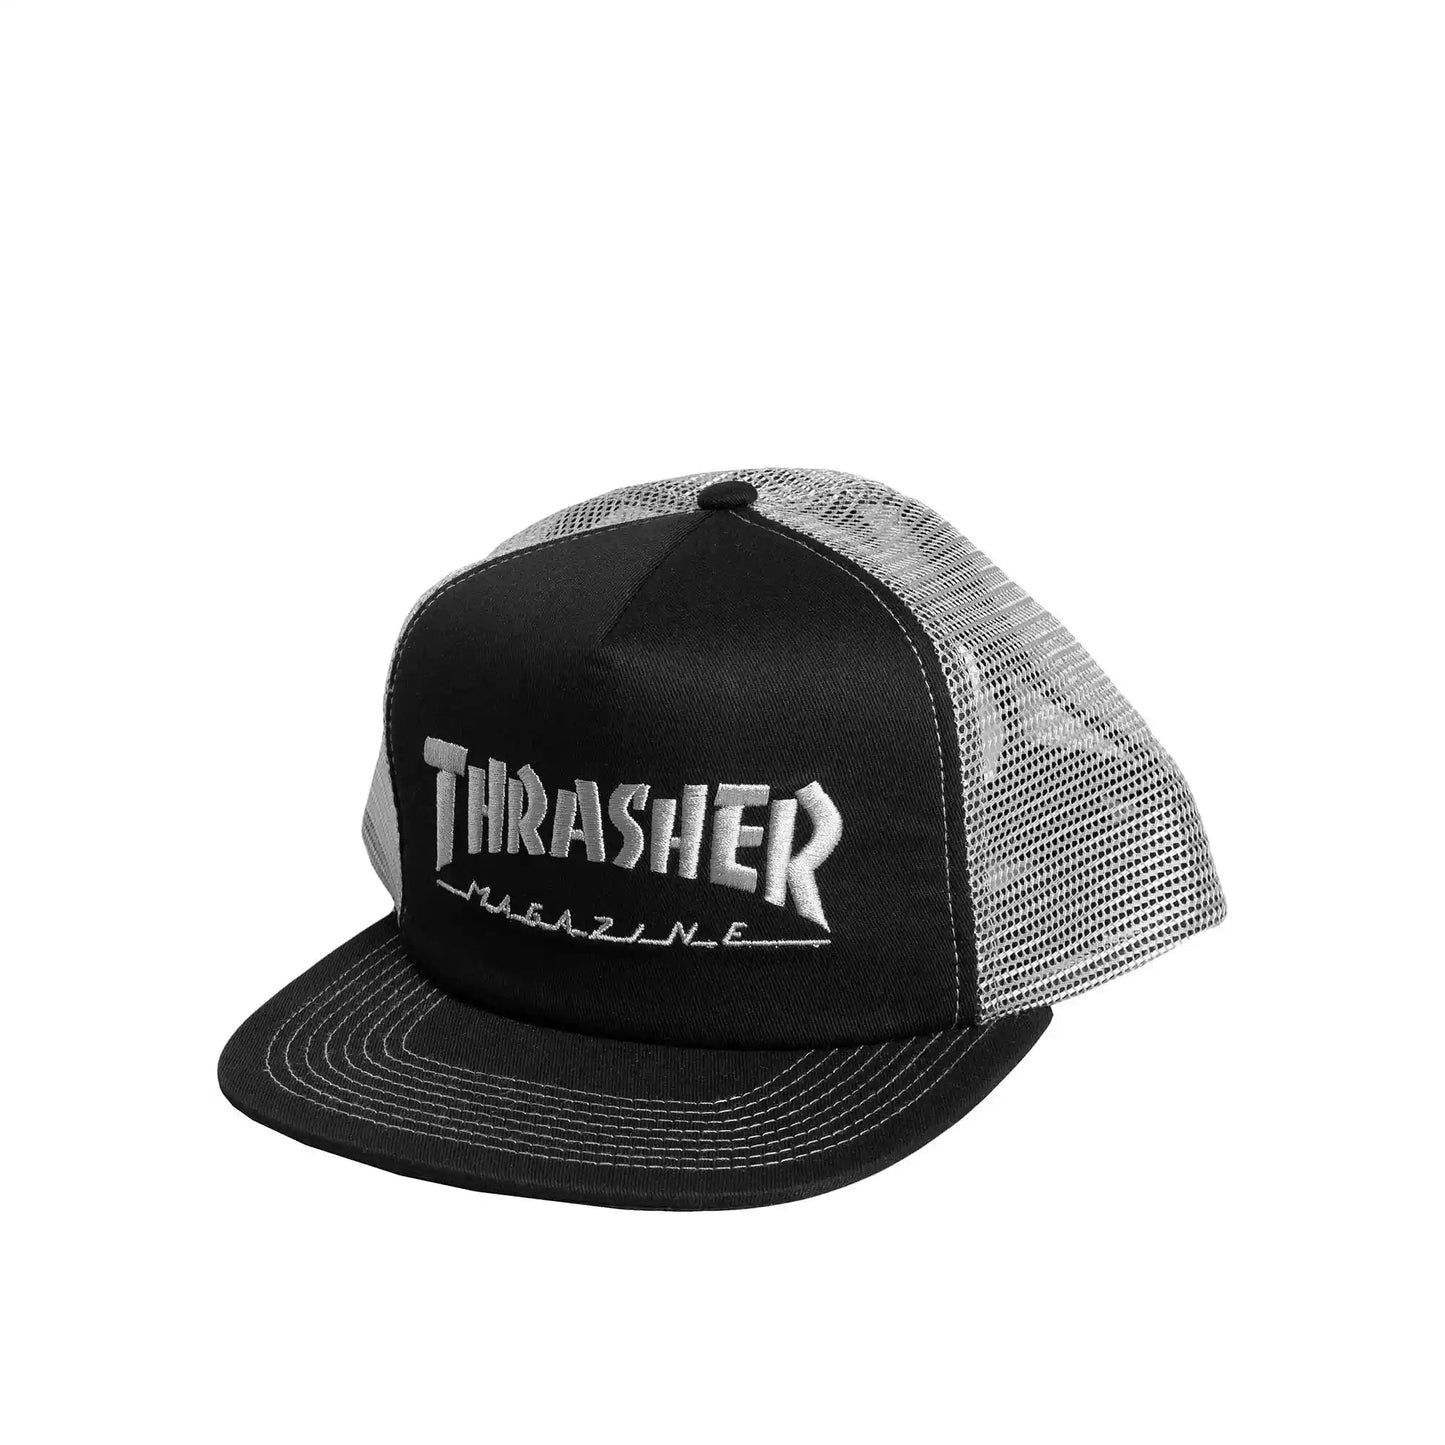 Thrasher Embroidered Logo Mesh Cap, black/grey - Tiki Room Skateboards - 1